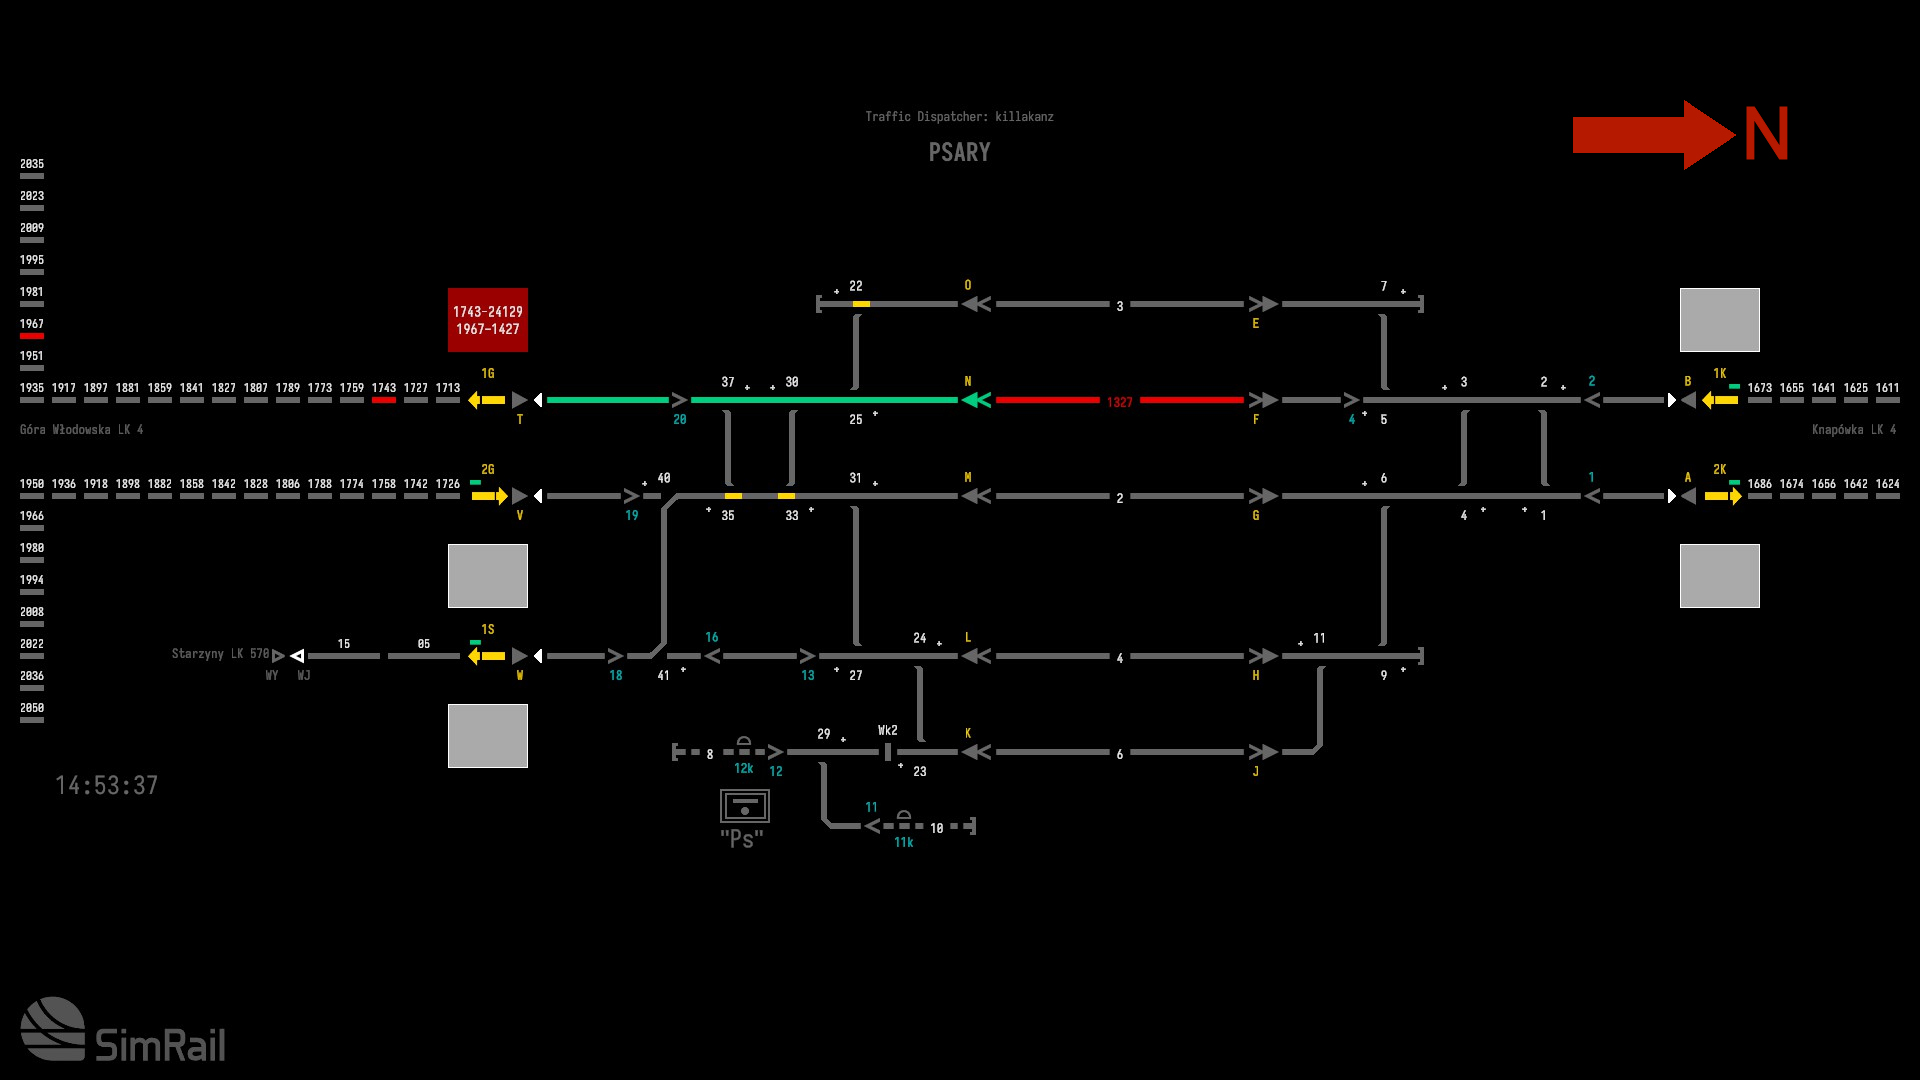 SimRail - The Railway Simulator - Basic Dispatching Full Guide - Psary - In Detail (computerised) - 1C793F7